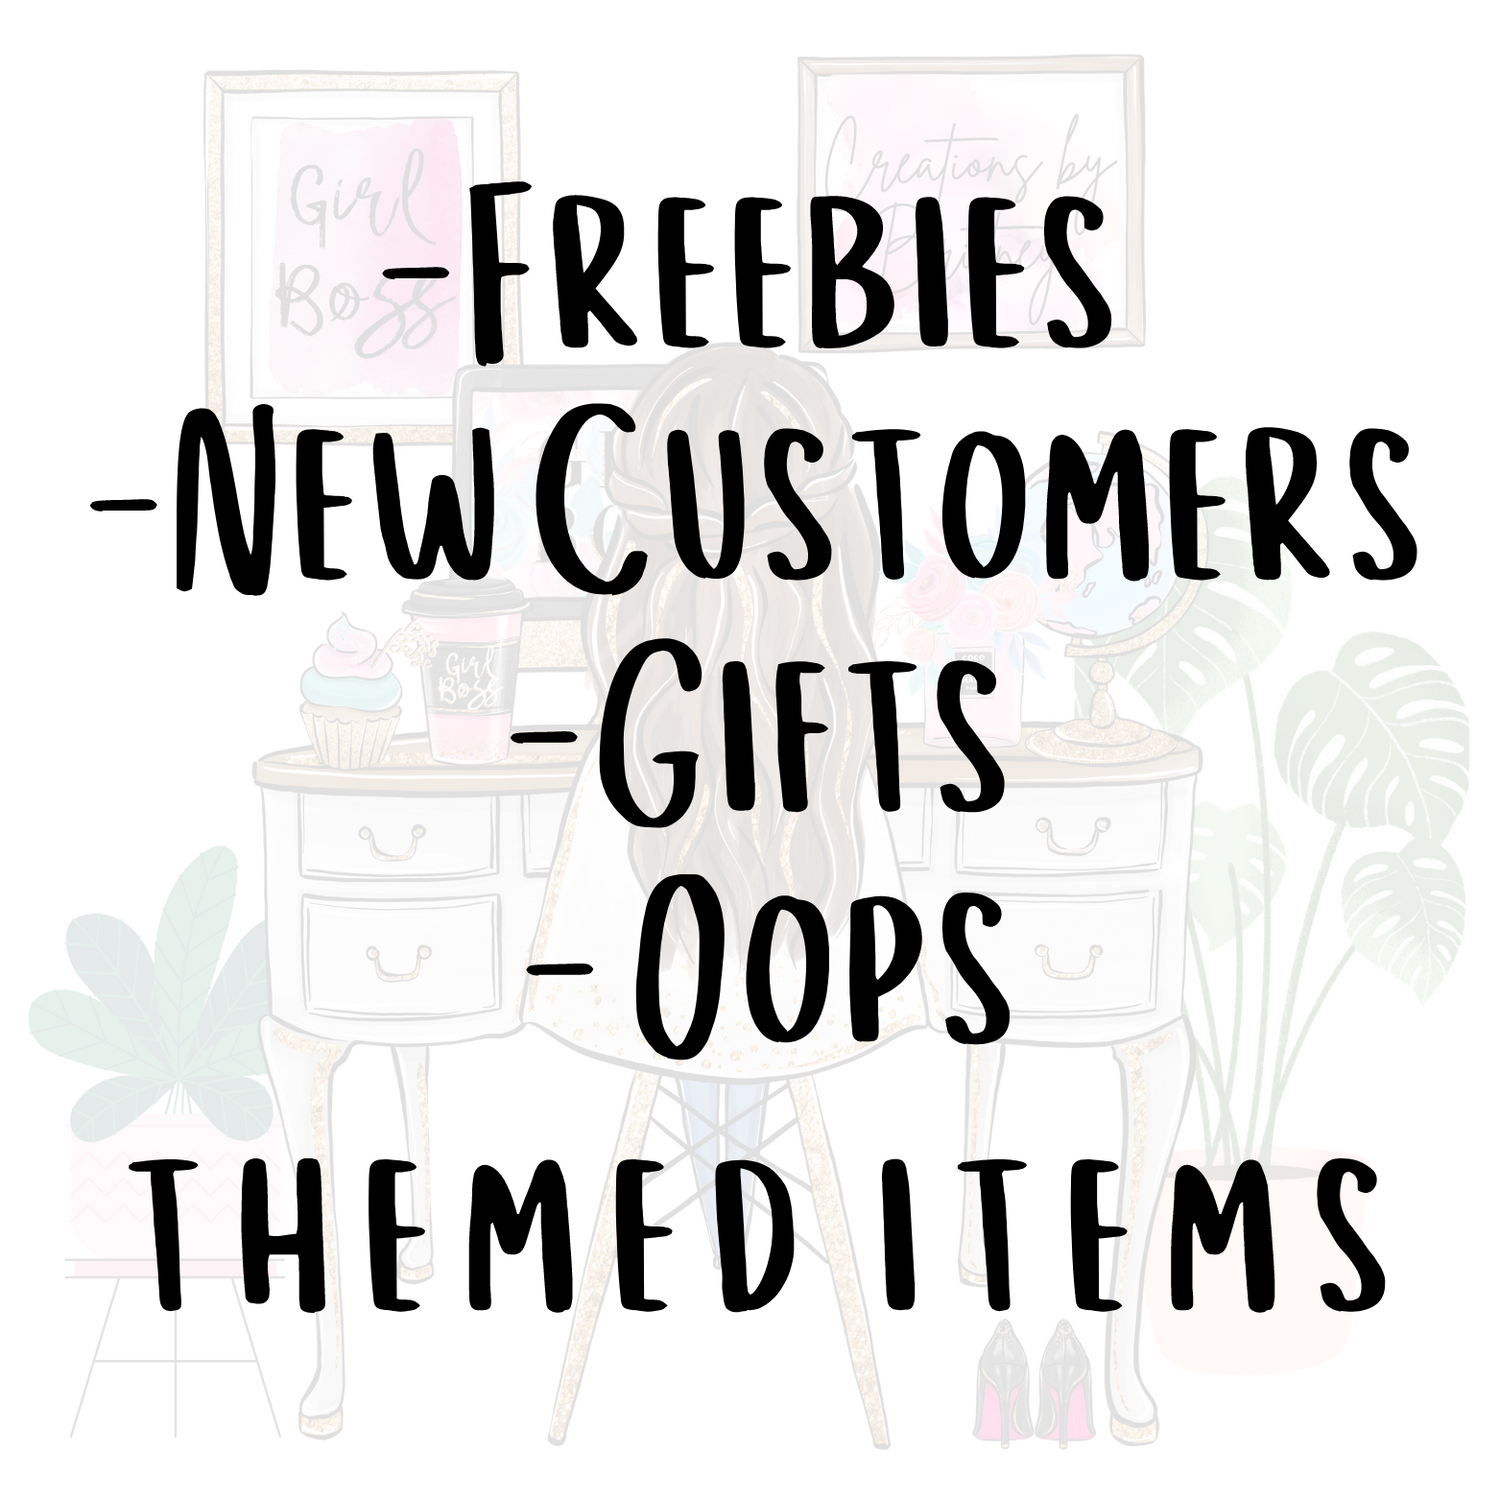 Freebies / New Customers / Gifts / Oops